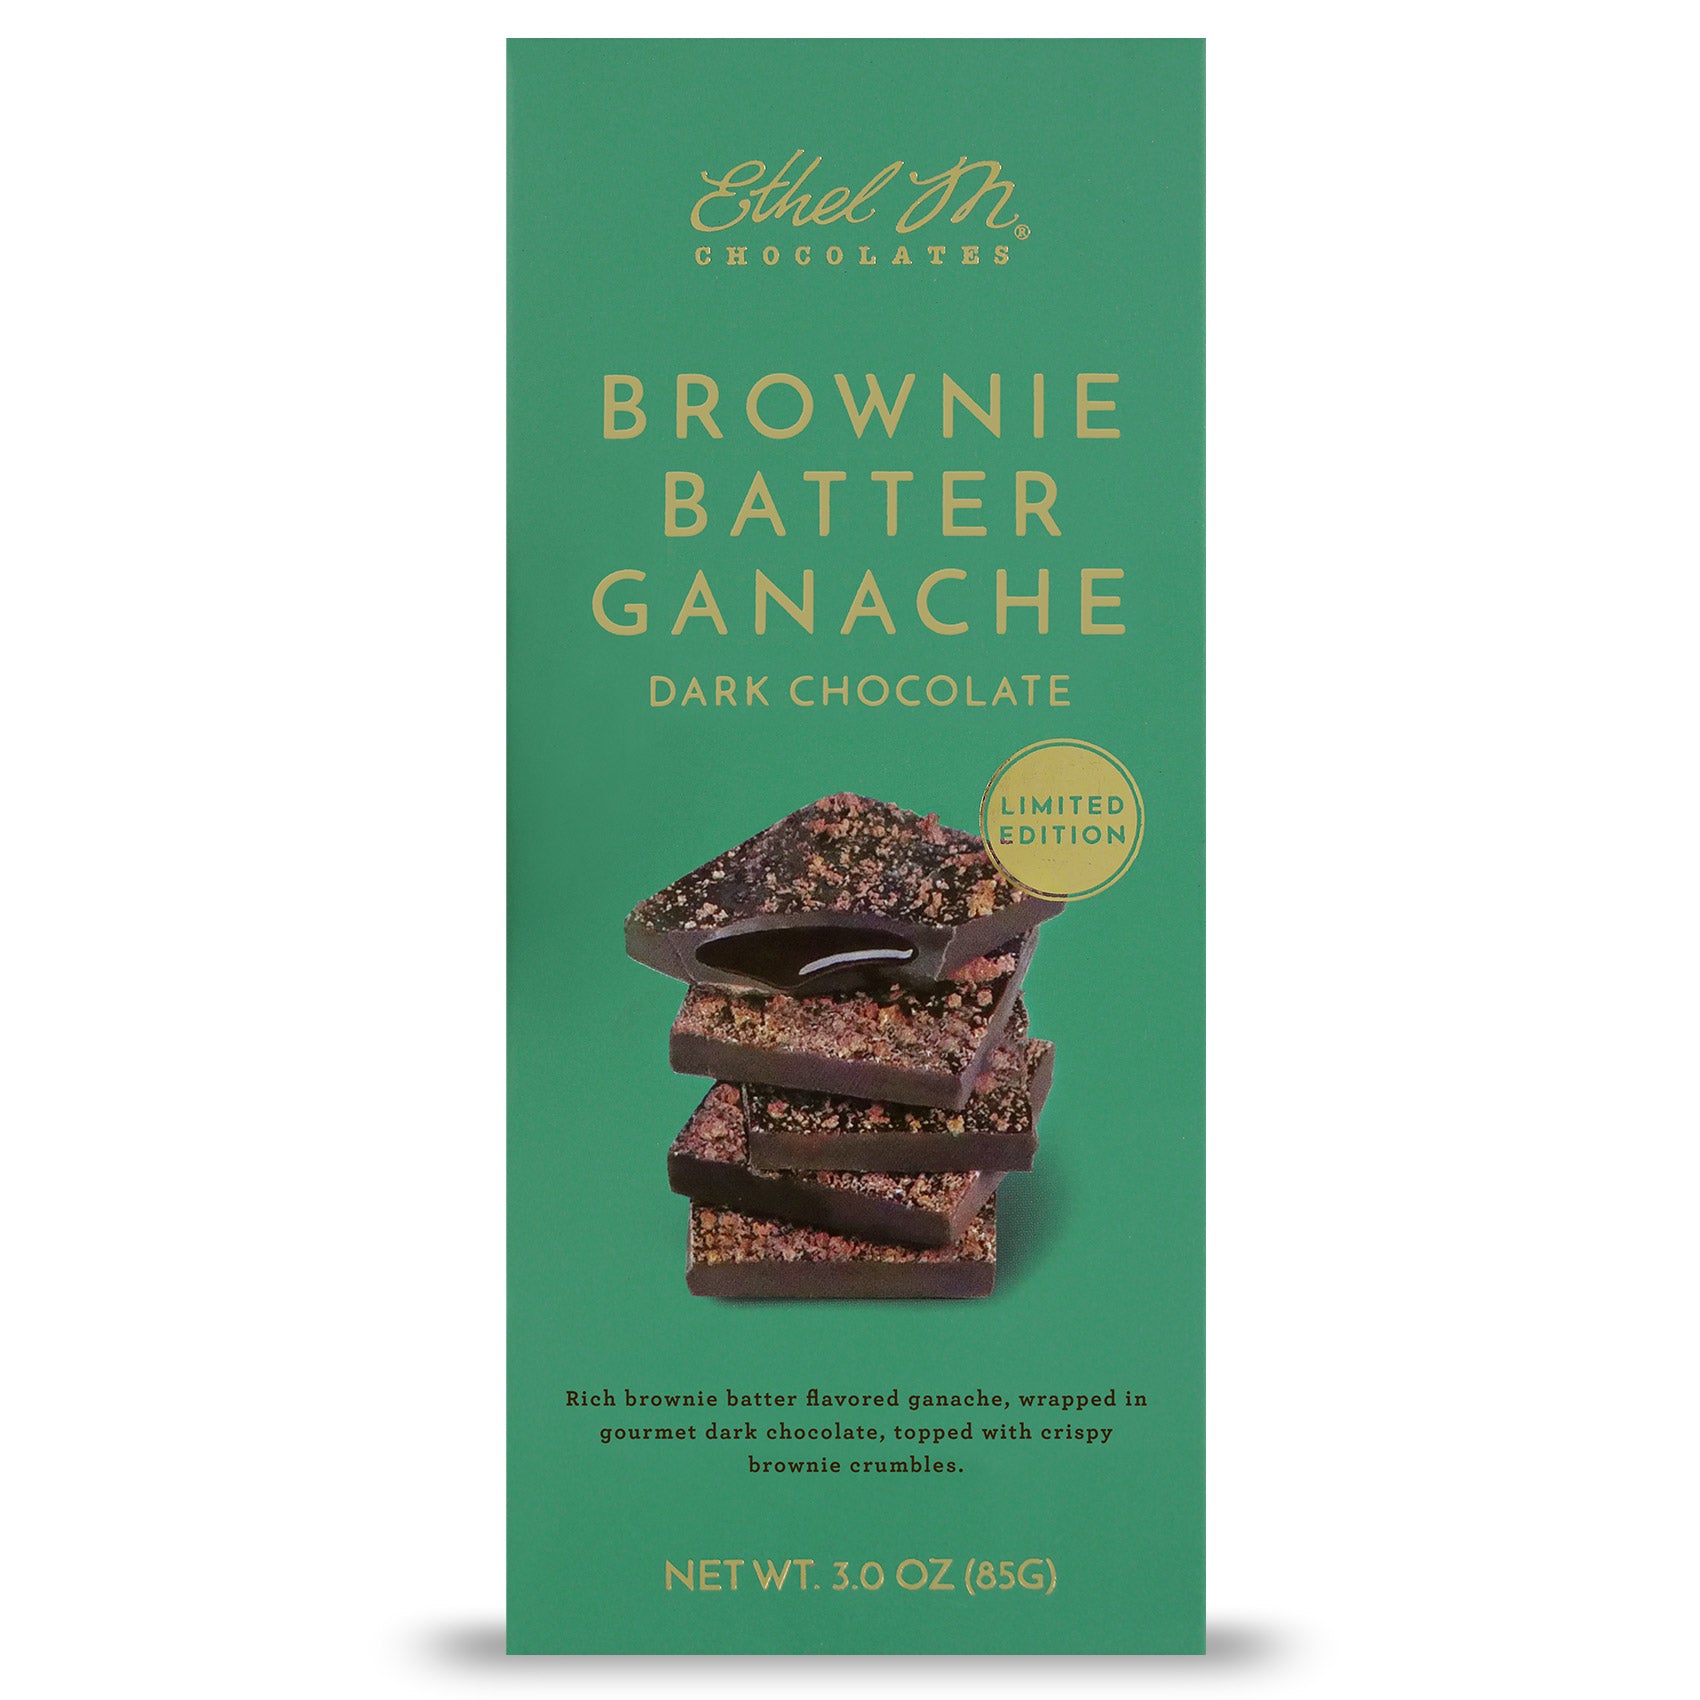 NEW Brownie Batter Ganache Dark Chocolate Tablet Bar, Limited Edition